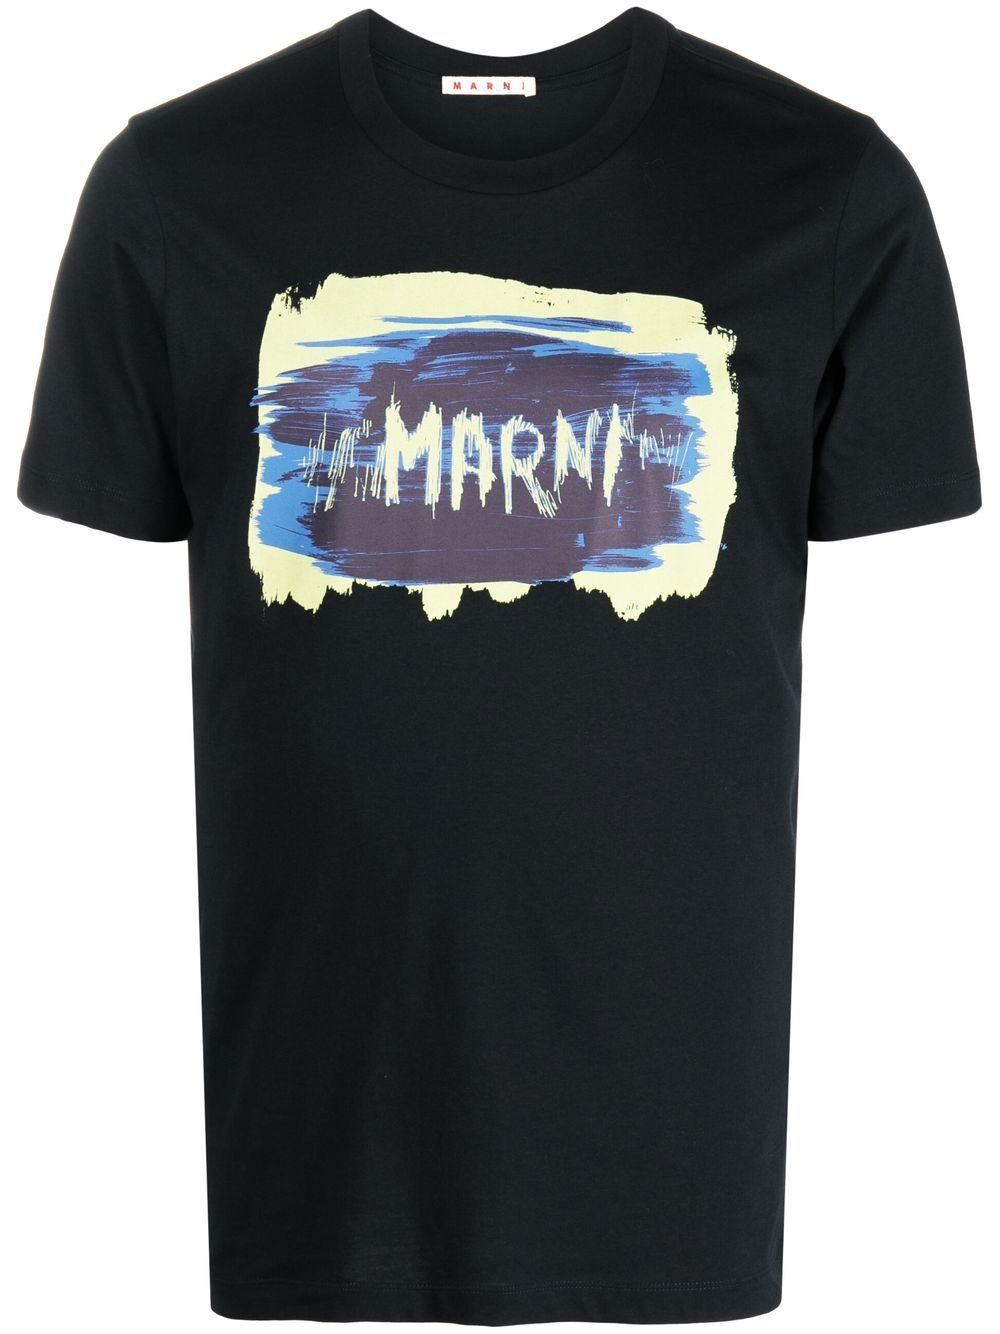 Marni Logo Print T-shirt - Farfetch